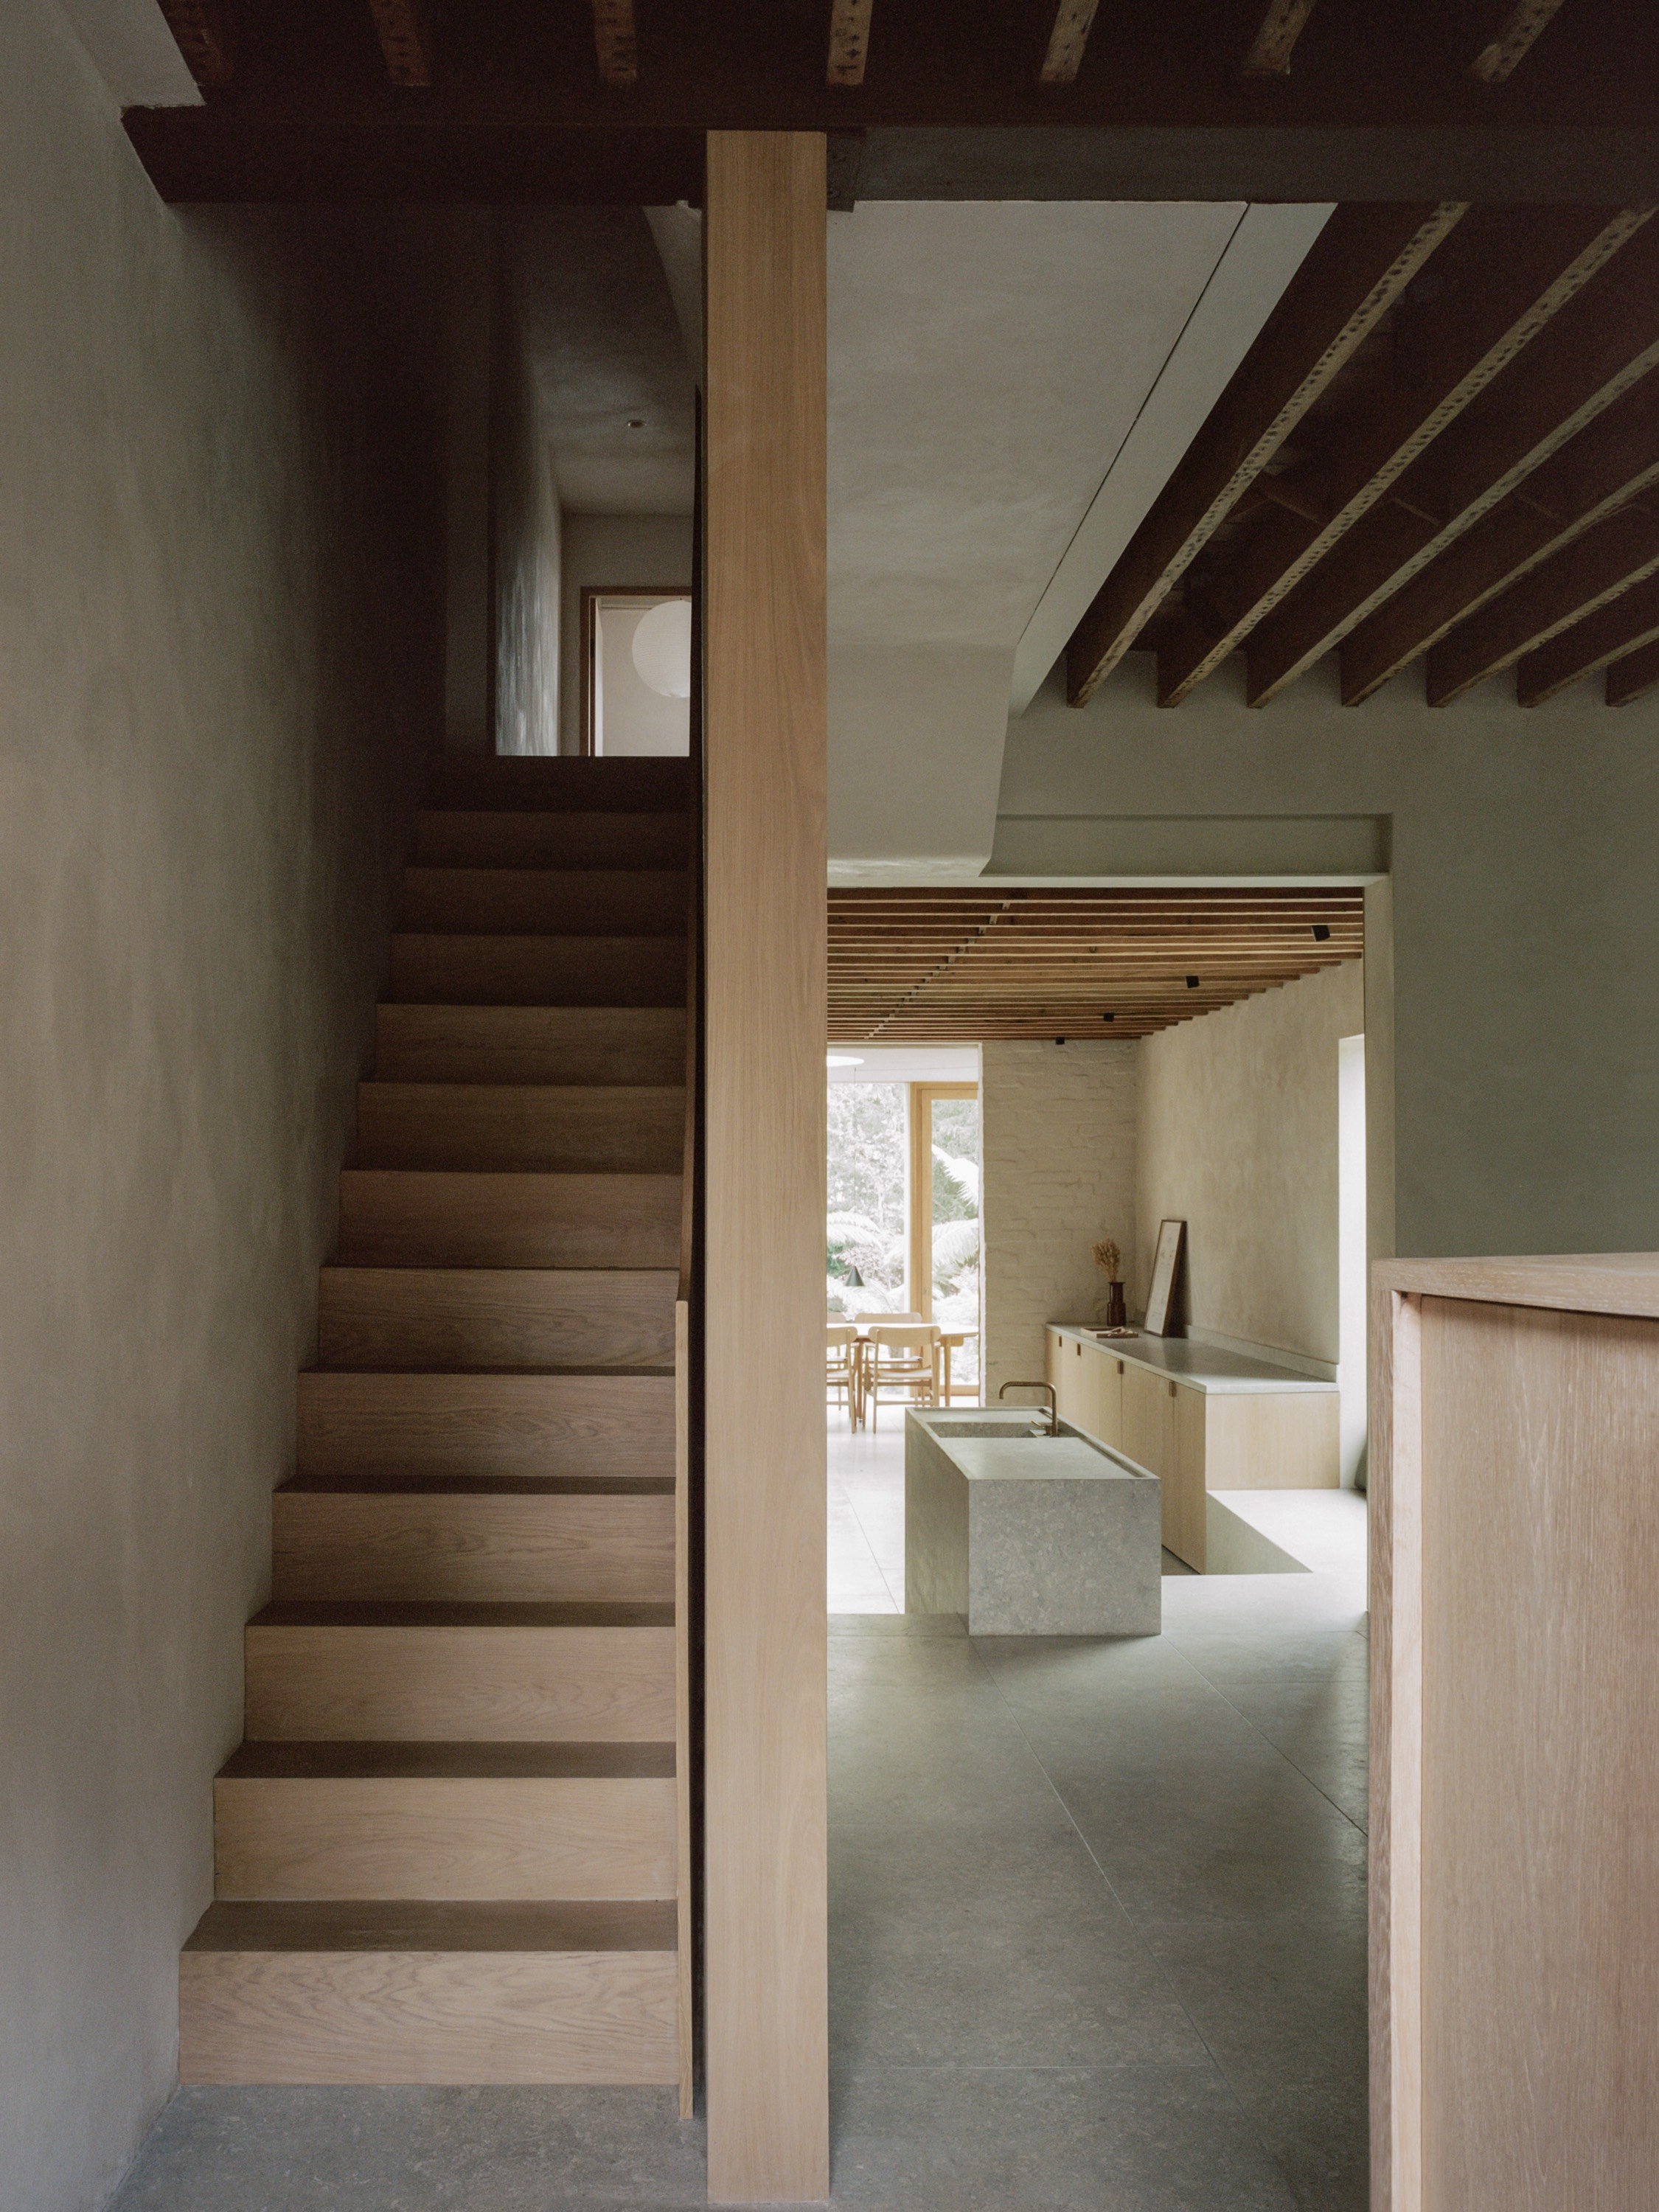 Architecture-for-London-Low-Energy-House-credit-Lorenzo-Zandri-1.jpg